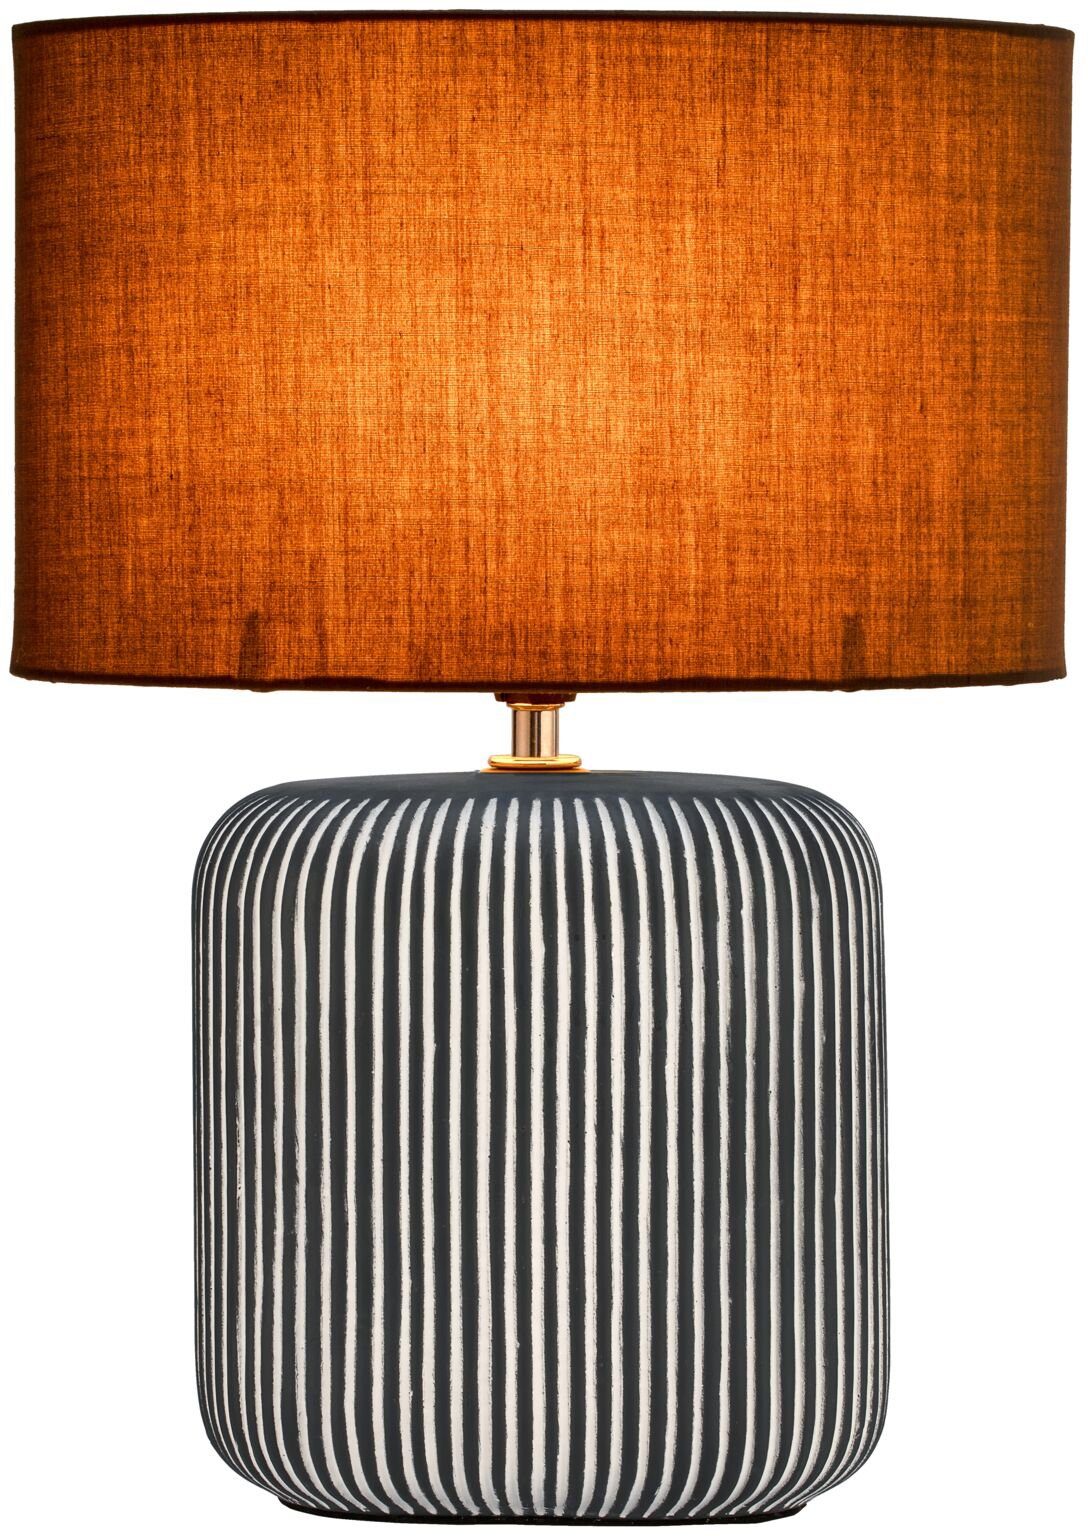 Timbers Tischleuchte »Shelter Island«, Hamptons Style, Tischlampe mit Textilschirm, Keramikfuß-HomeTrends